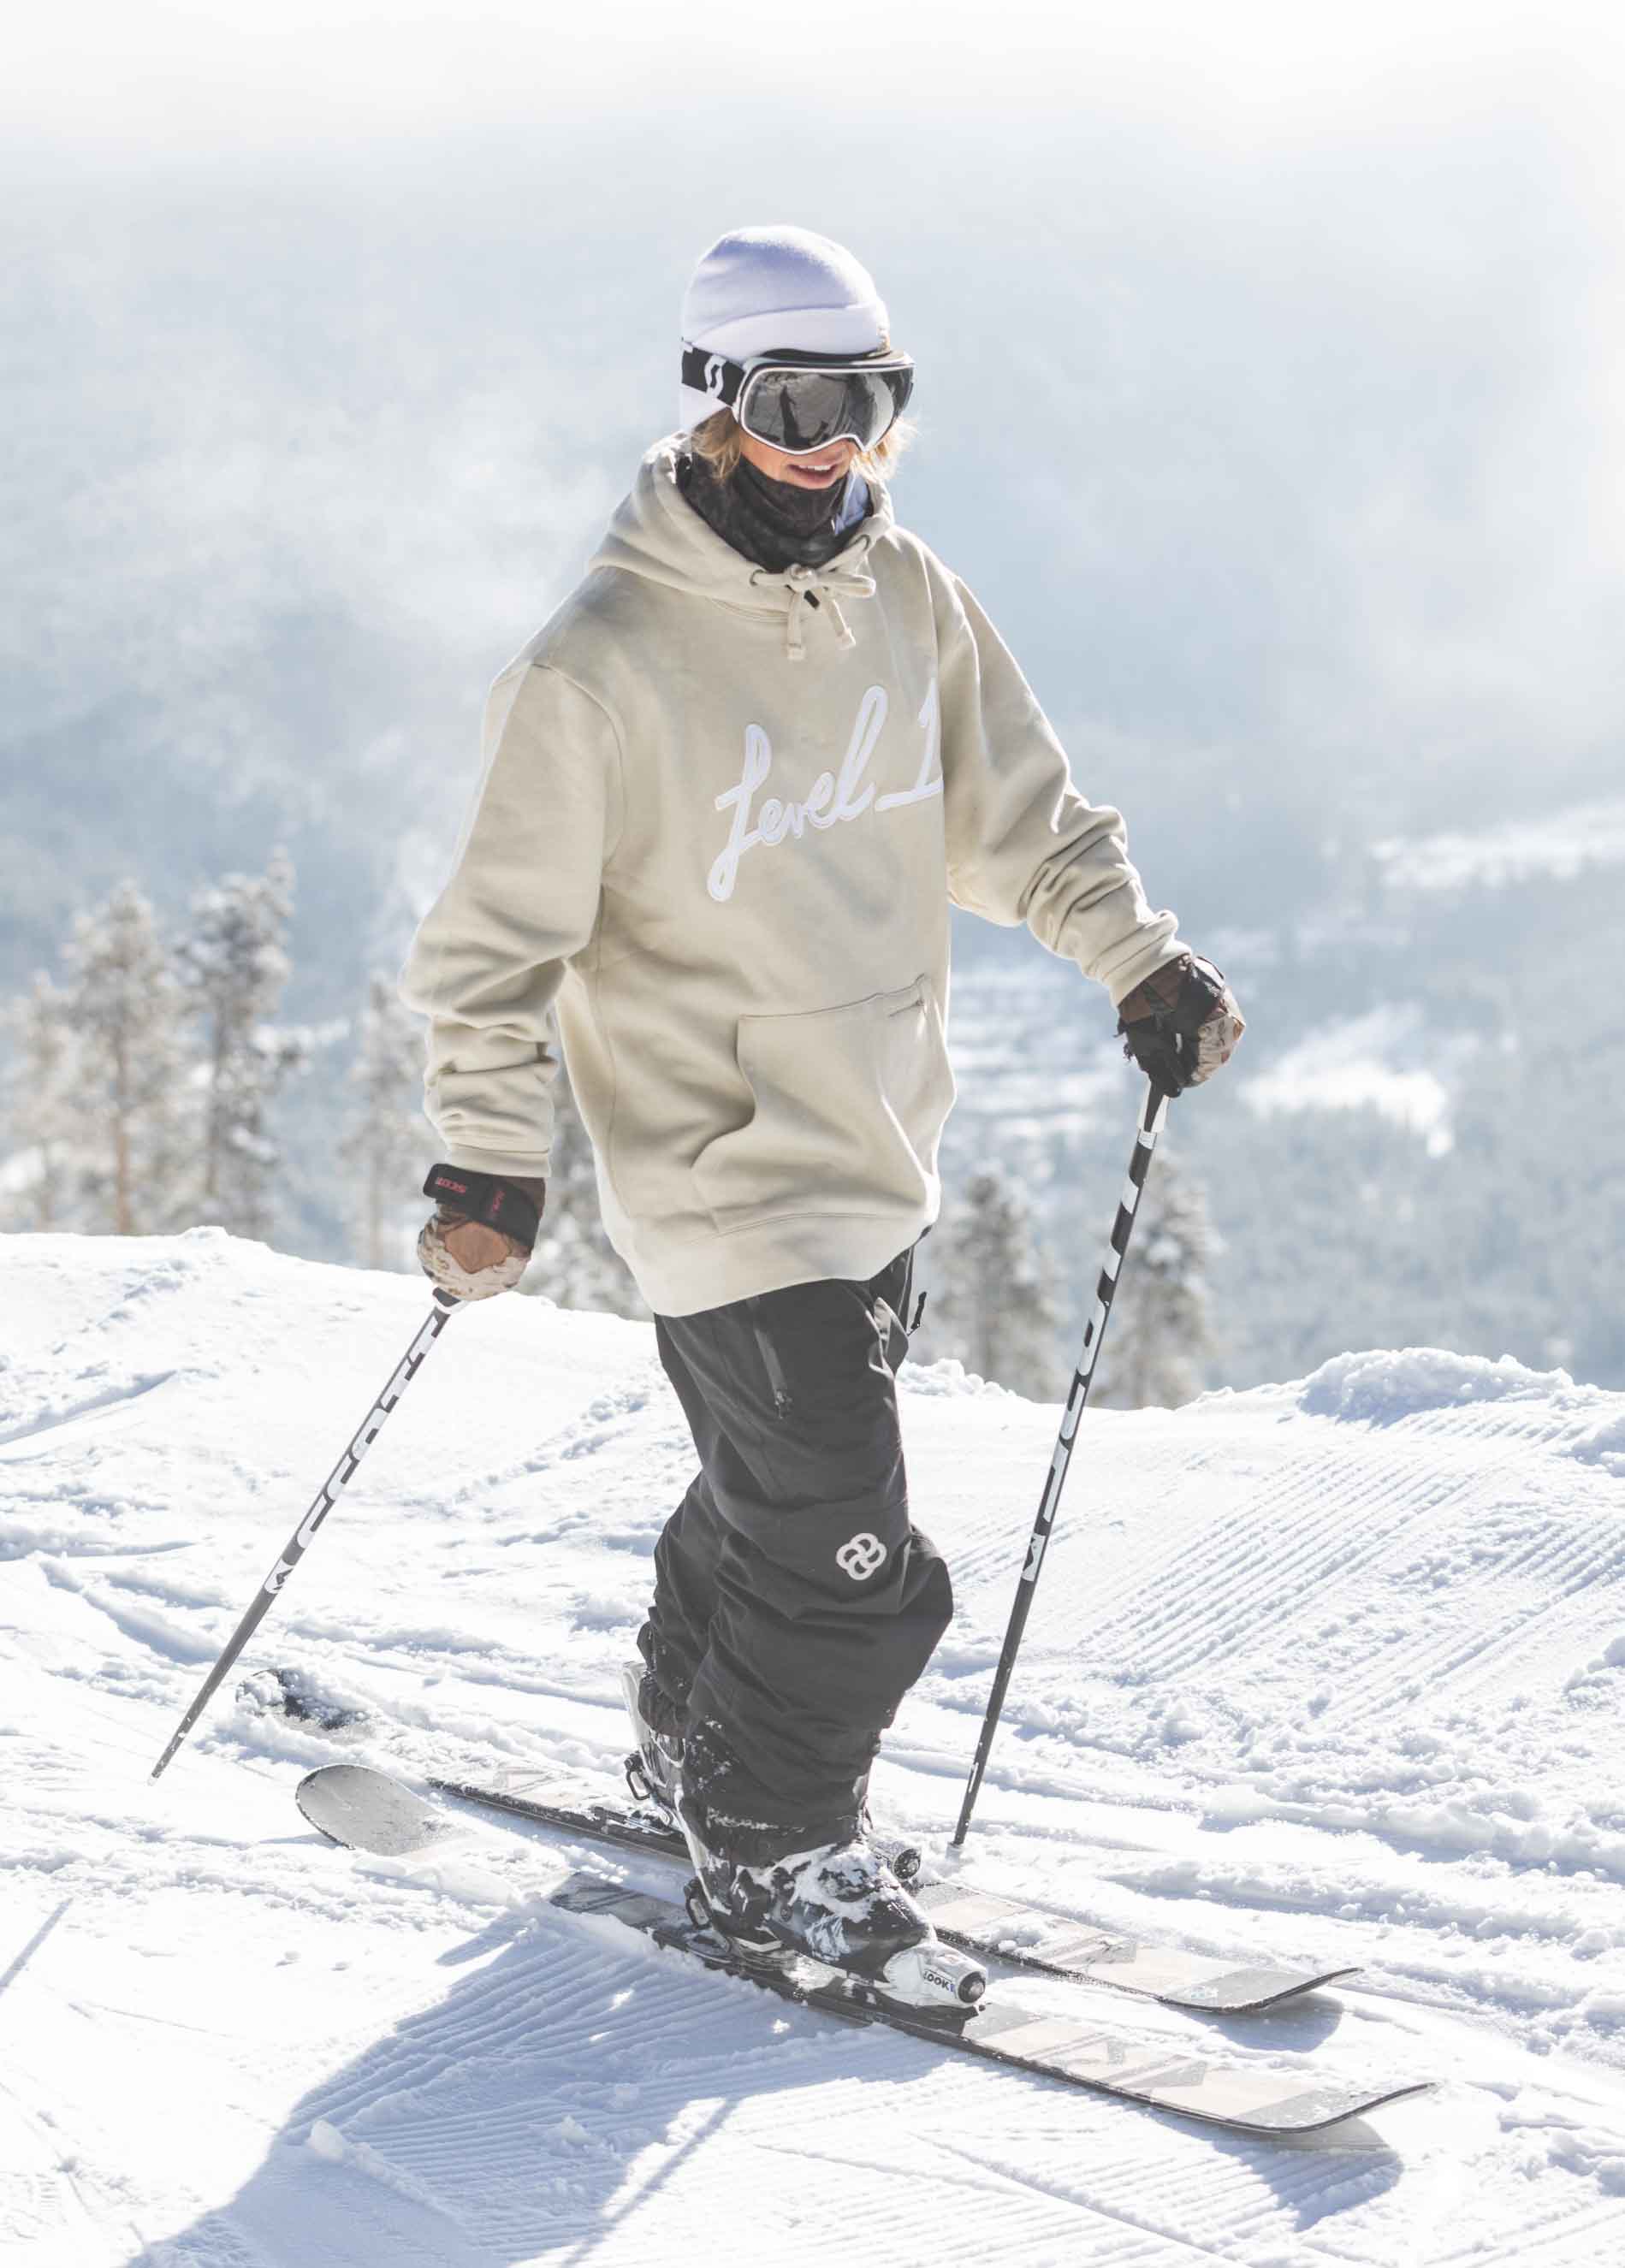 adidas Originals 'Ski Chic' ski pants in black